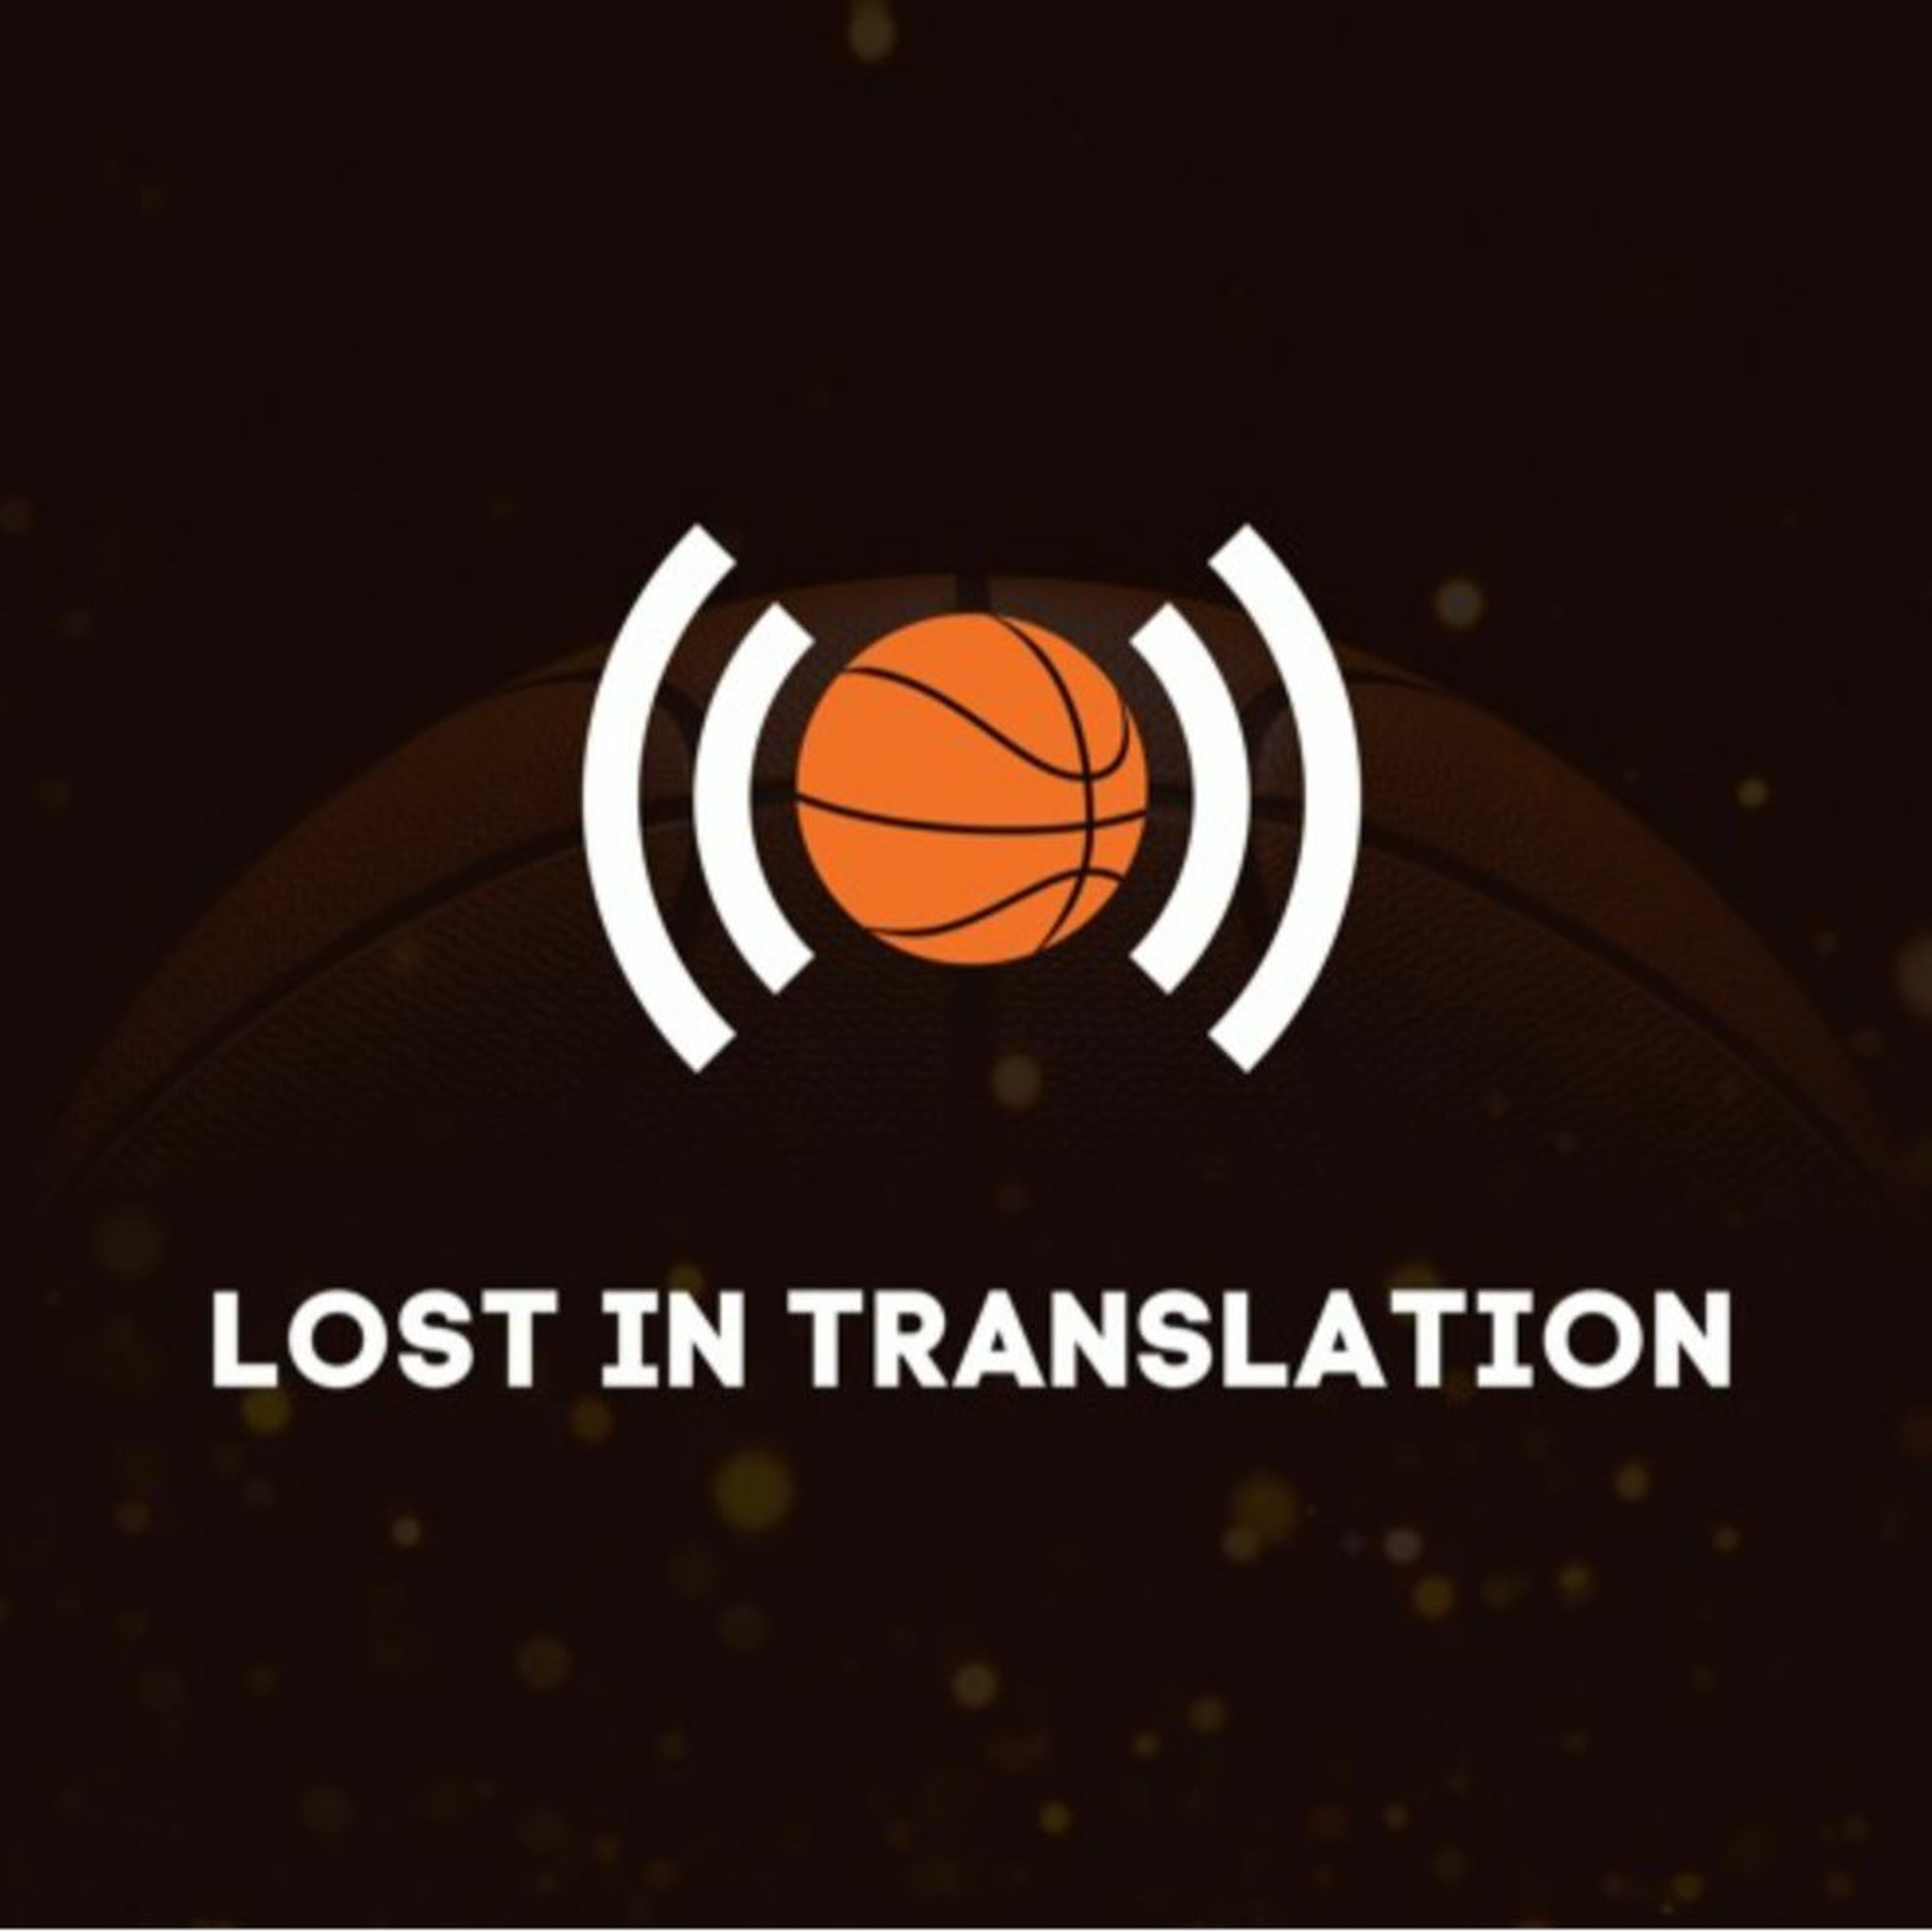 Lost in Translation Episode 32 Part 1 - LIT on the Road with BU men's basketball's Joe Jones